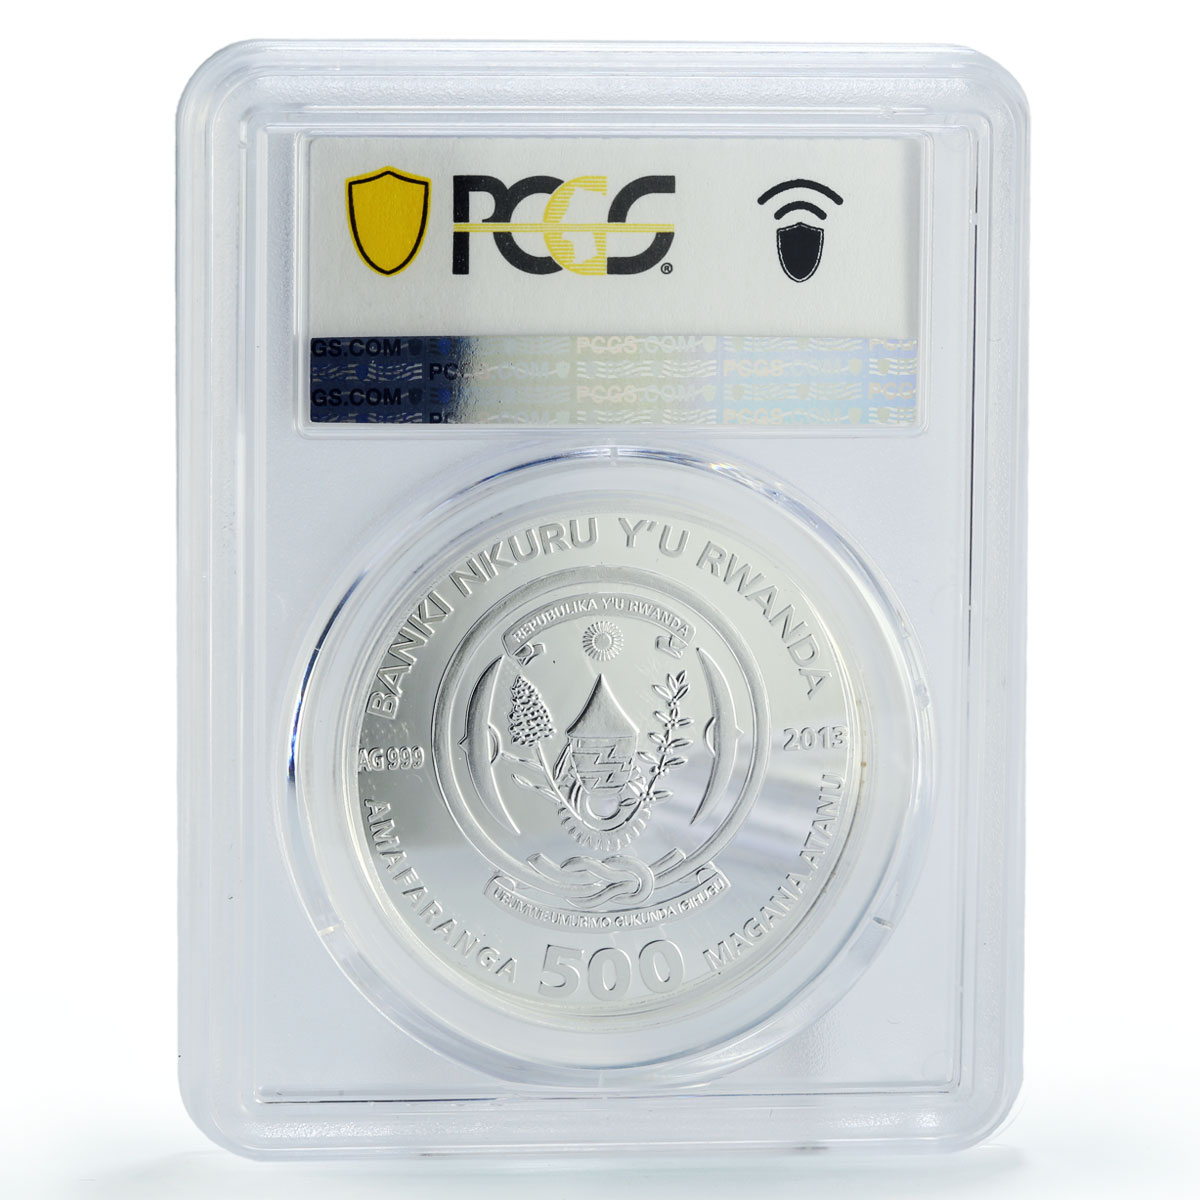 Rwanda 500 francs Lunar Year of the Snake Harmony PR69 PCGS silver coin 2013